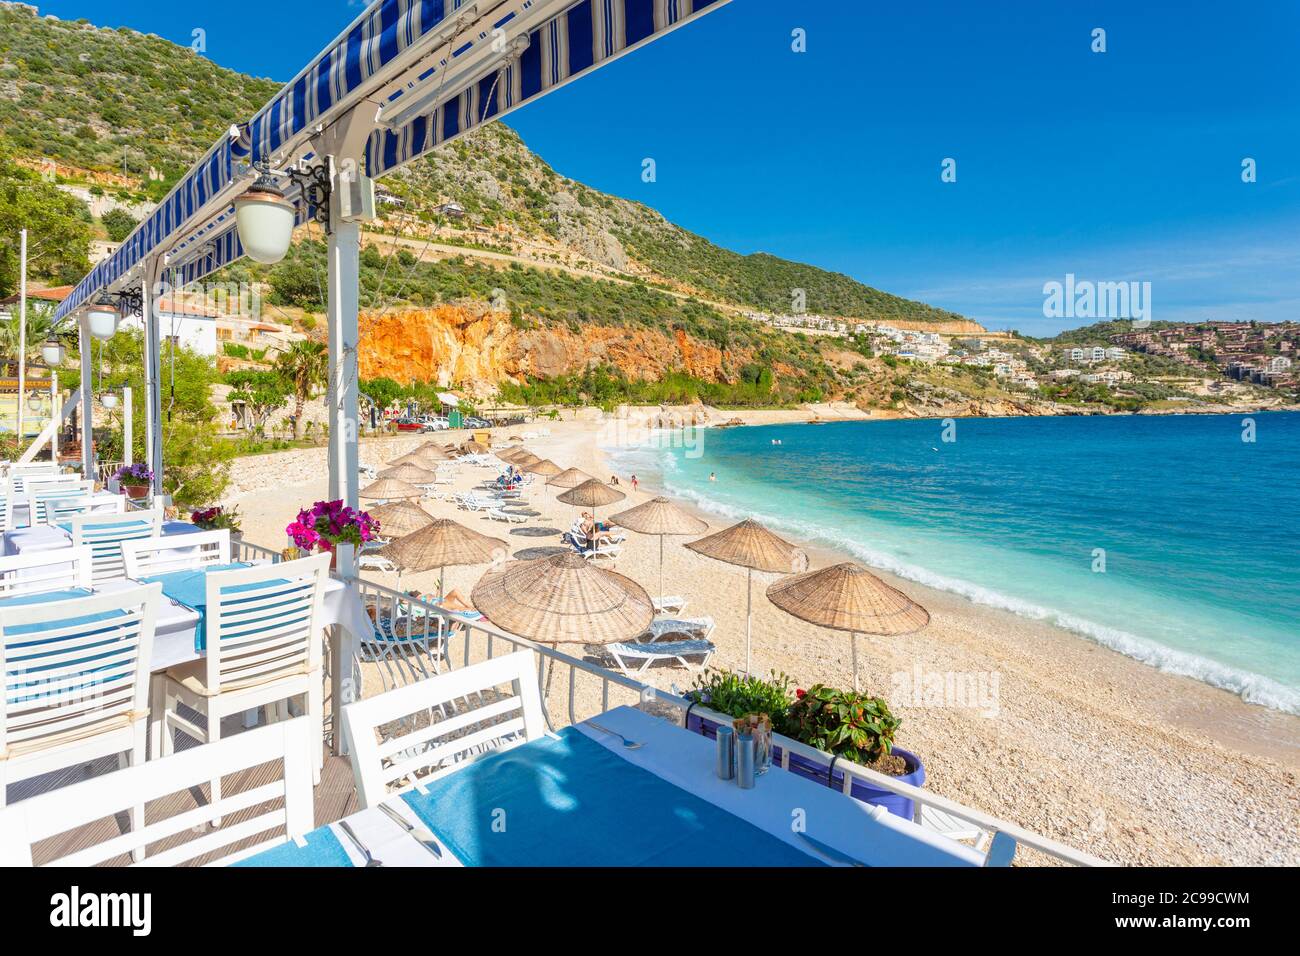 Vue sur la plage de Kalkan depuis un restaurant en bord de mer, province d'Antalya, Turquie Banque D'Images